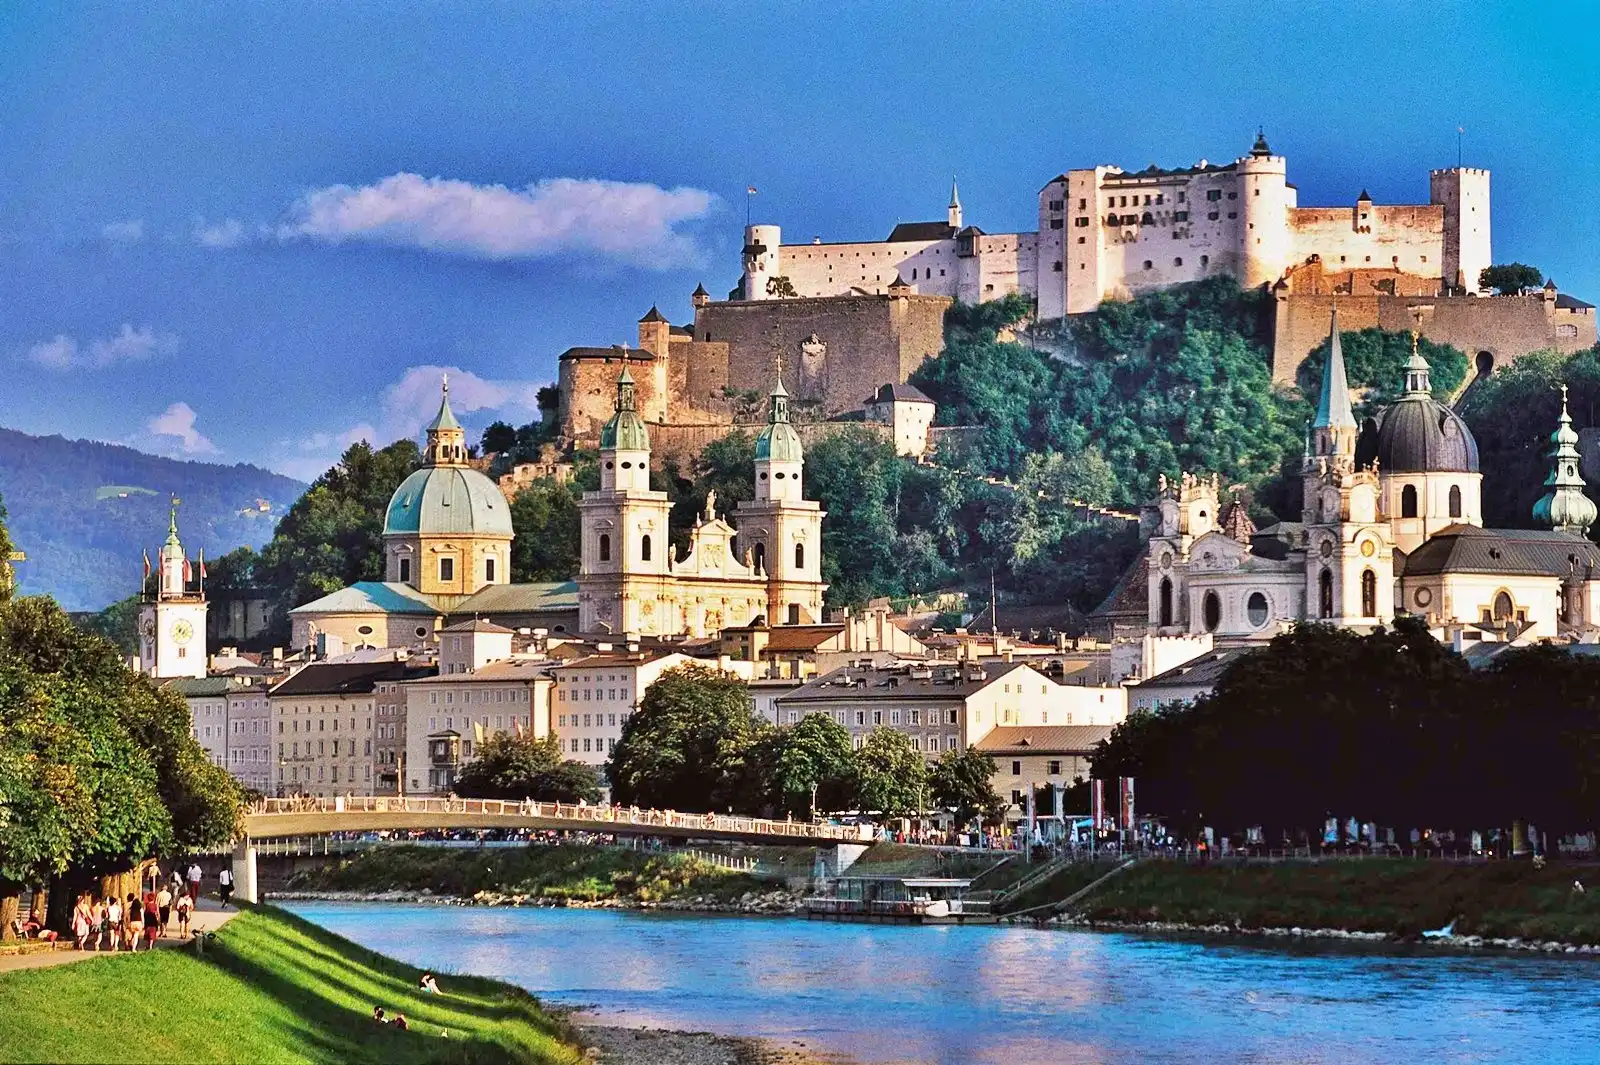 Salzburg tourism